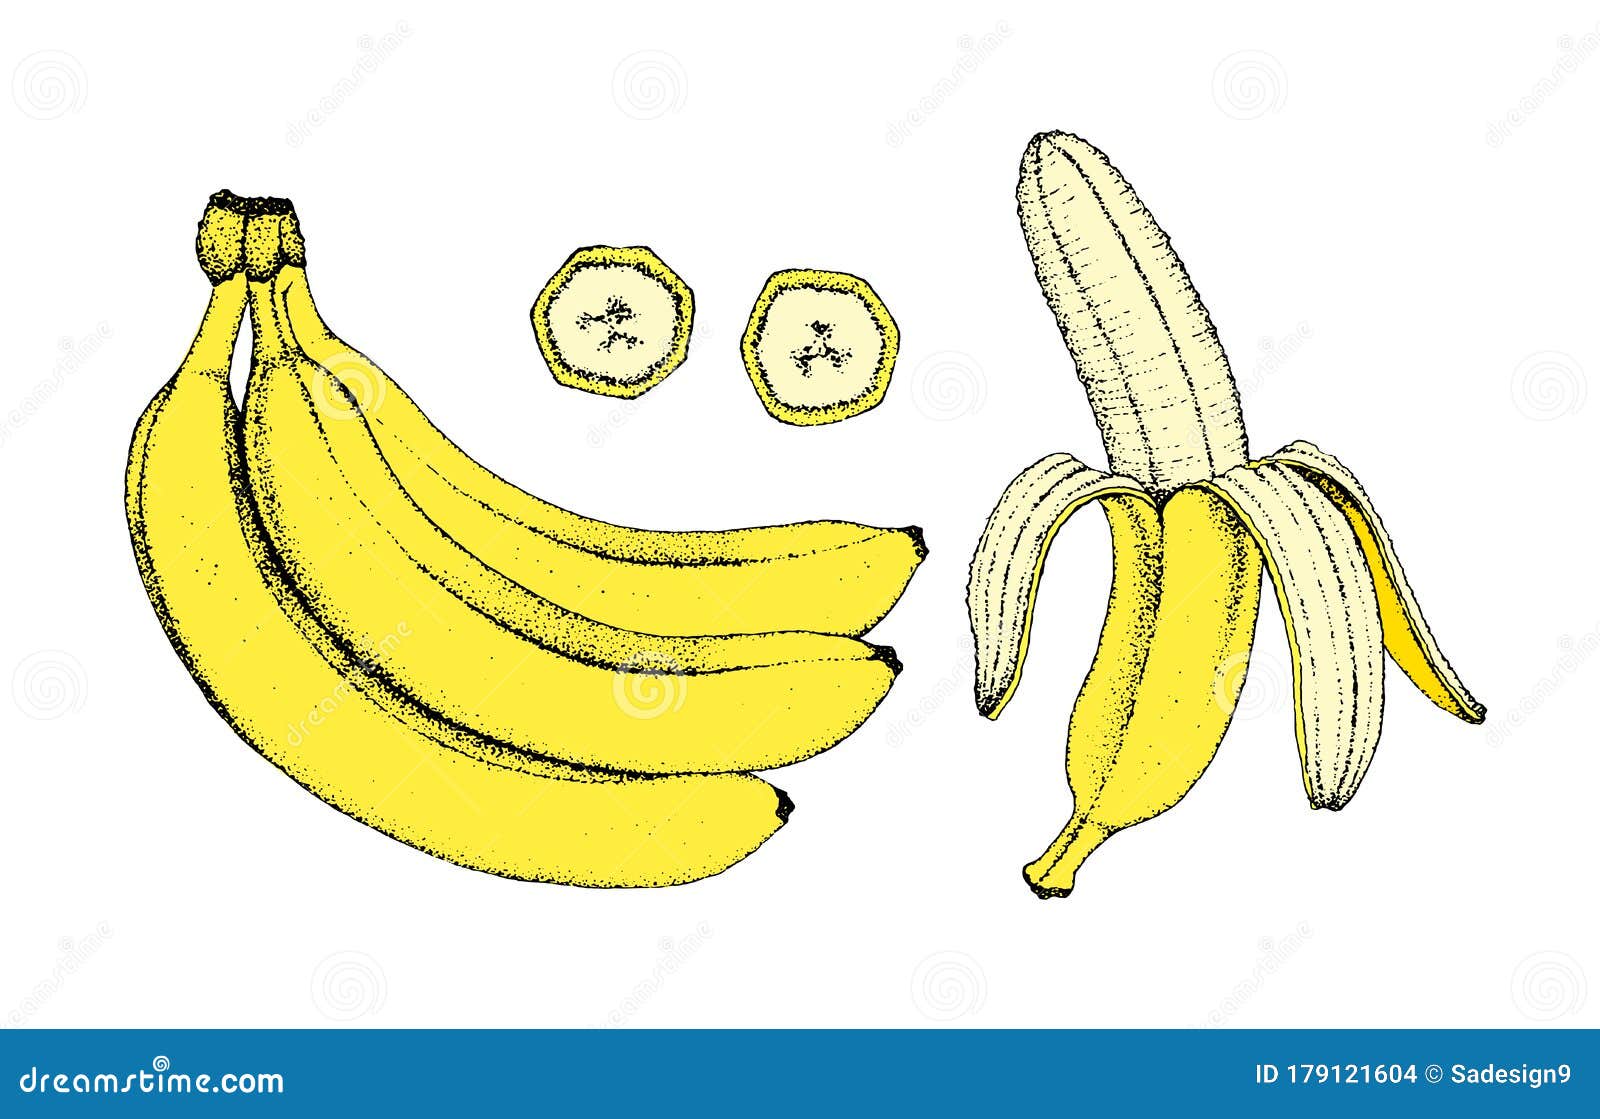 Hand Drawn Banana Fruit Set Isolated on White Background. Stock Vector ...